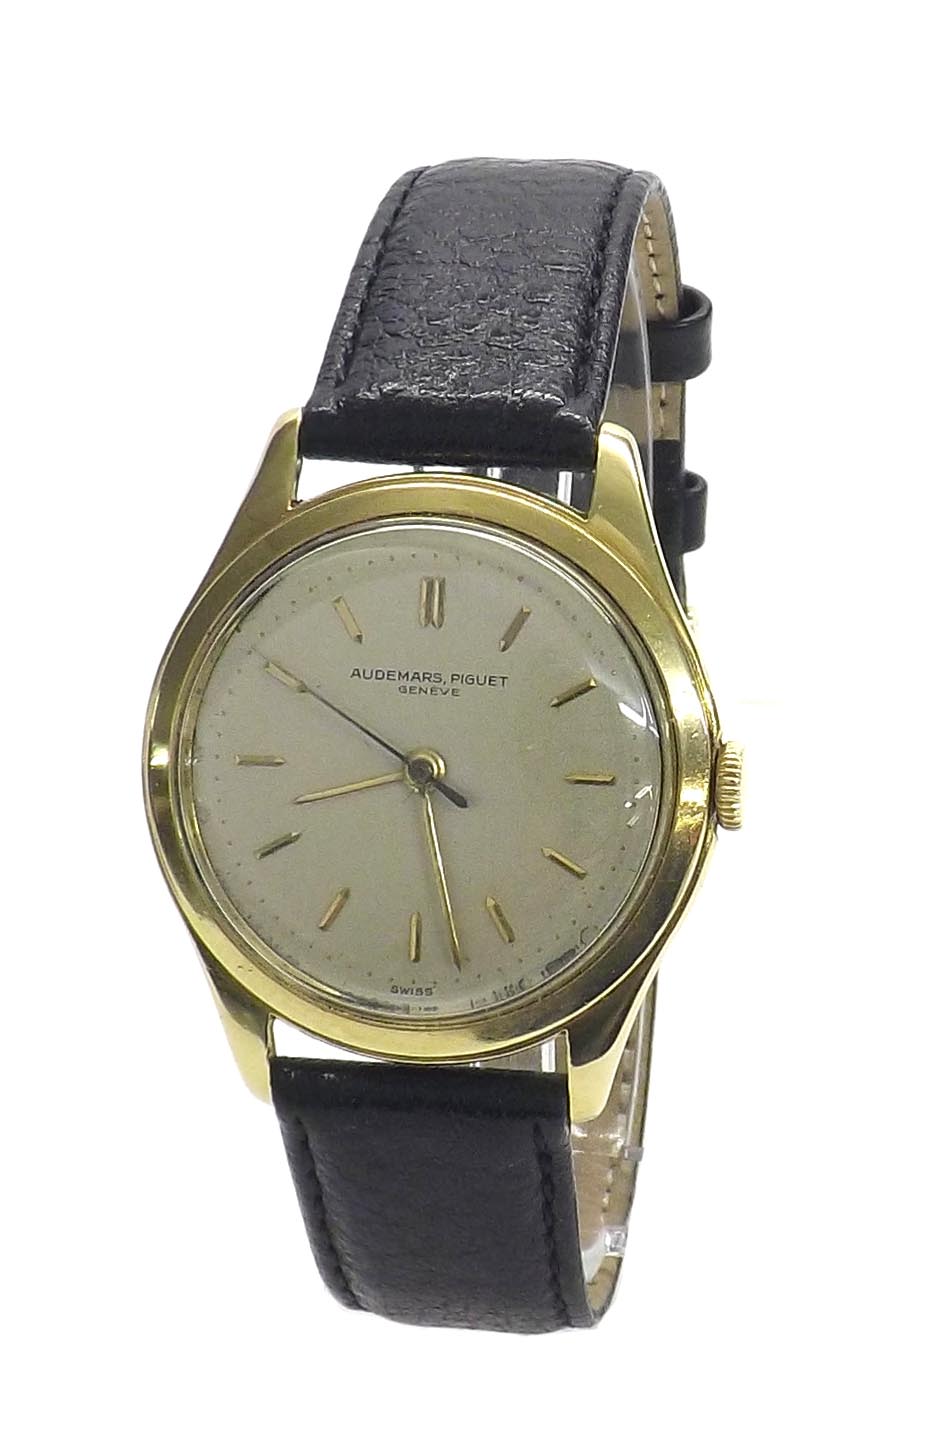 Audemars Piguet Geneve 1950s 18k gentleman's wristwatch, circular silvered dial with baton markers - Image 2 of 3